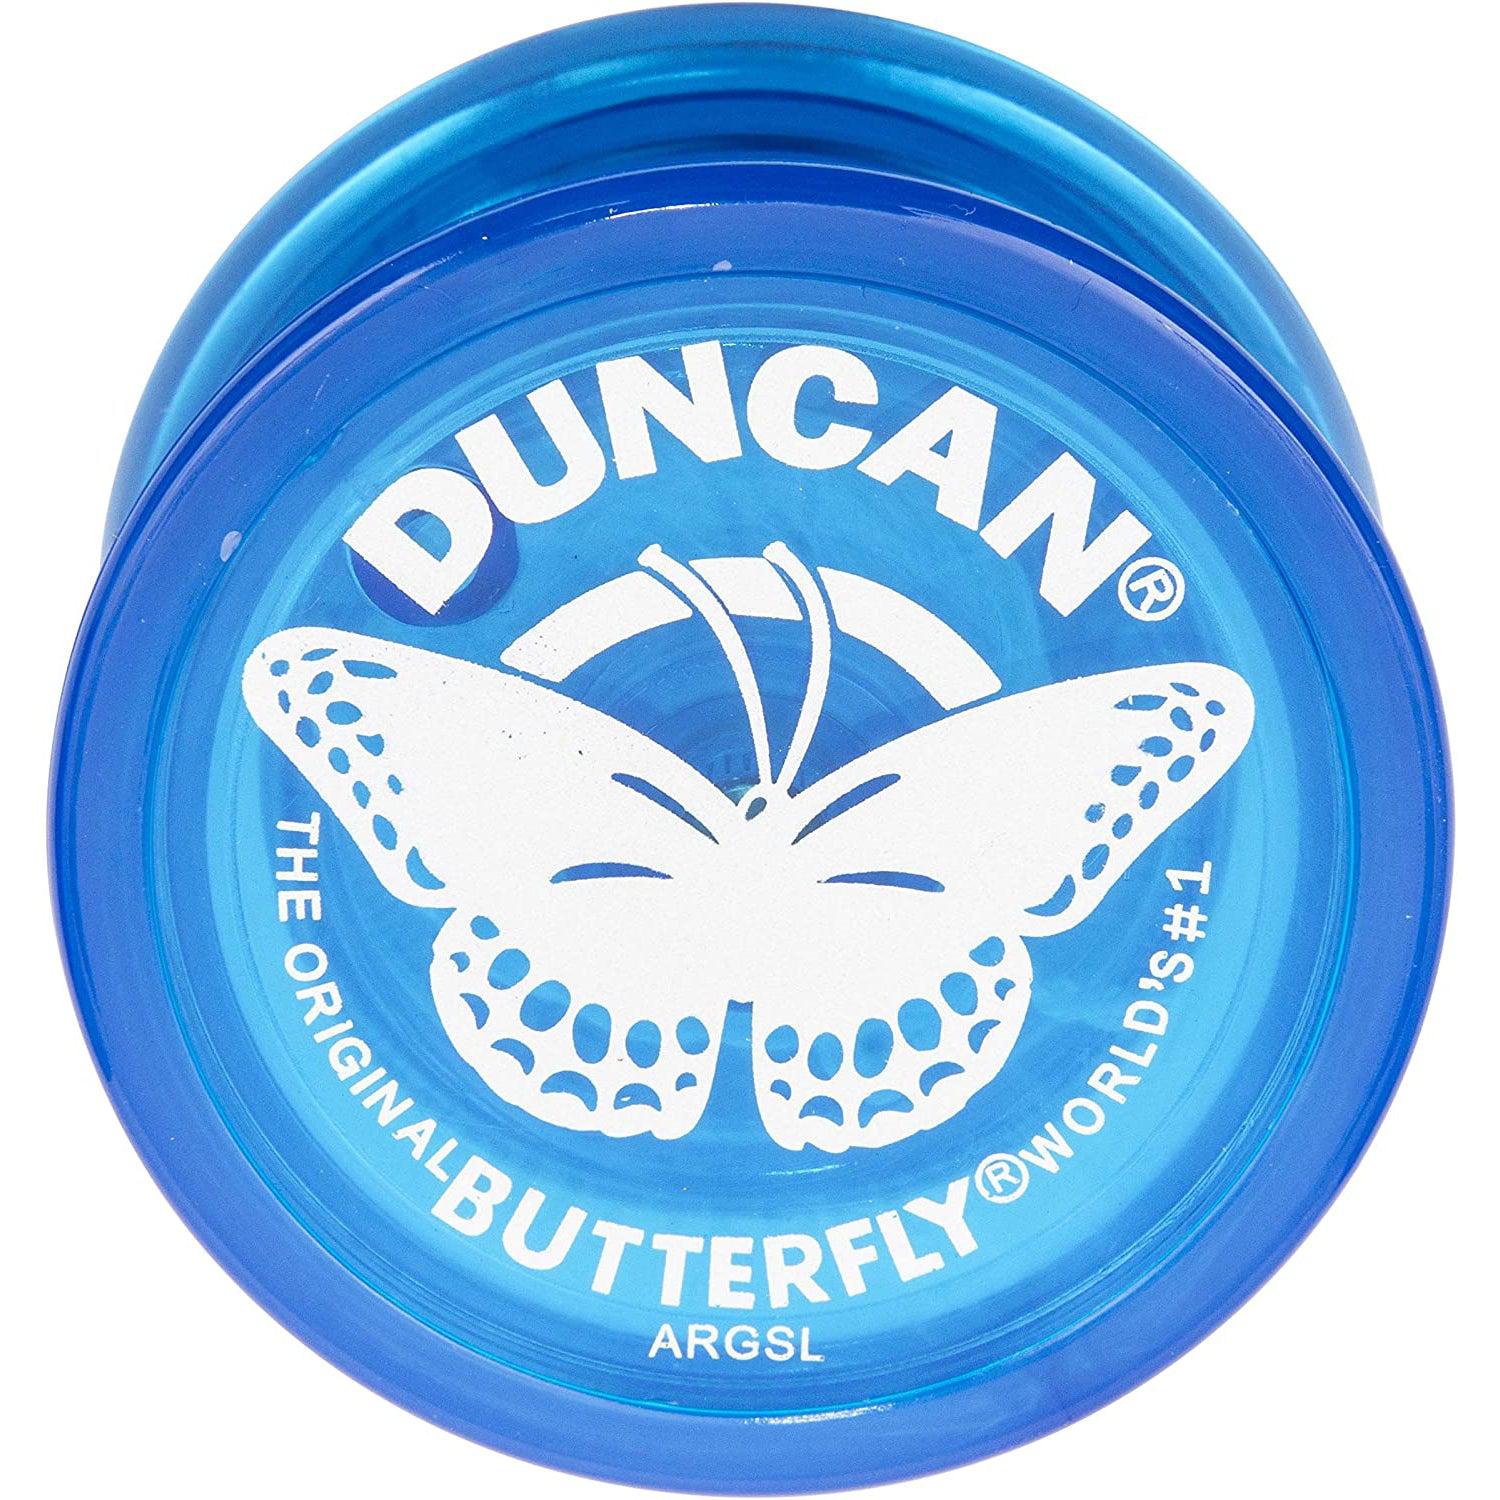 Duncan Toys-Butterfly Yo-Yo Assorted Colors-3124BU-Legacy Toys